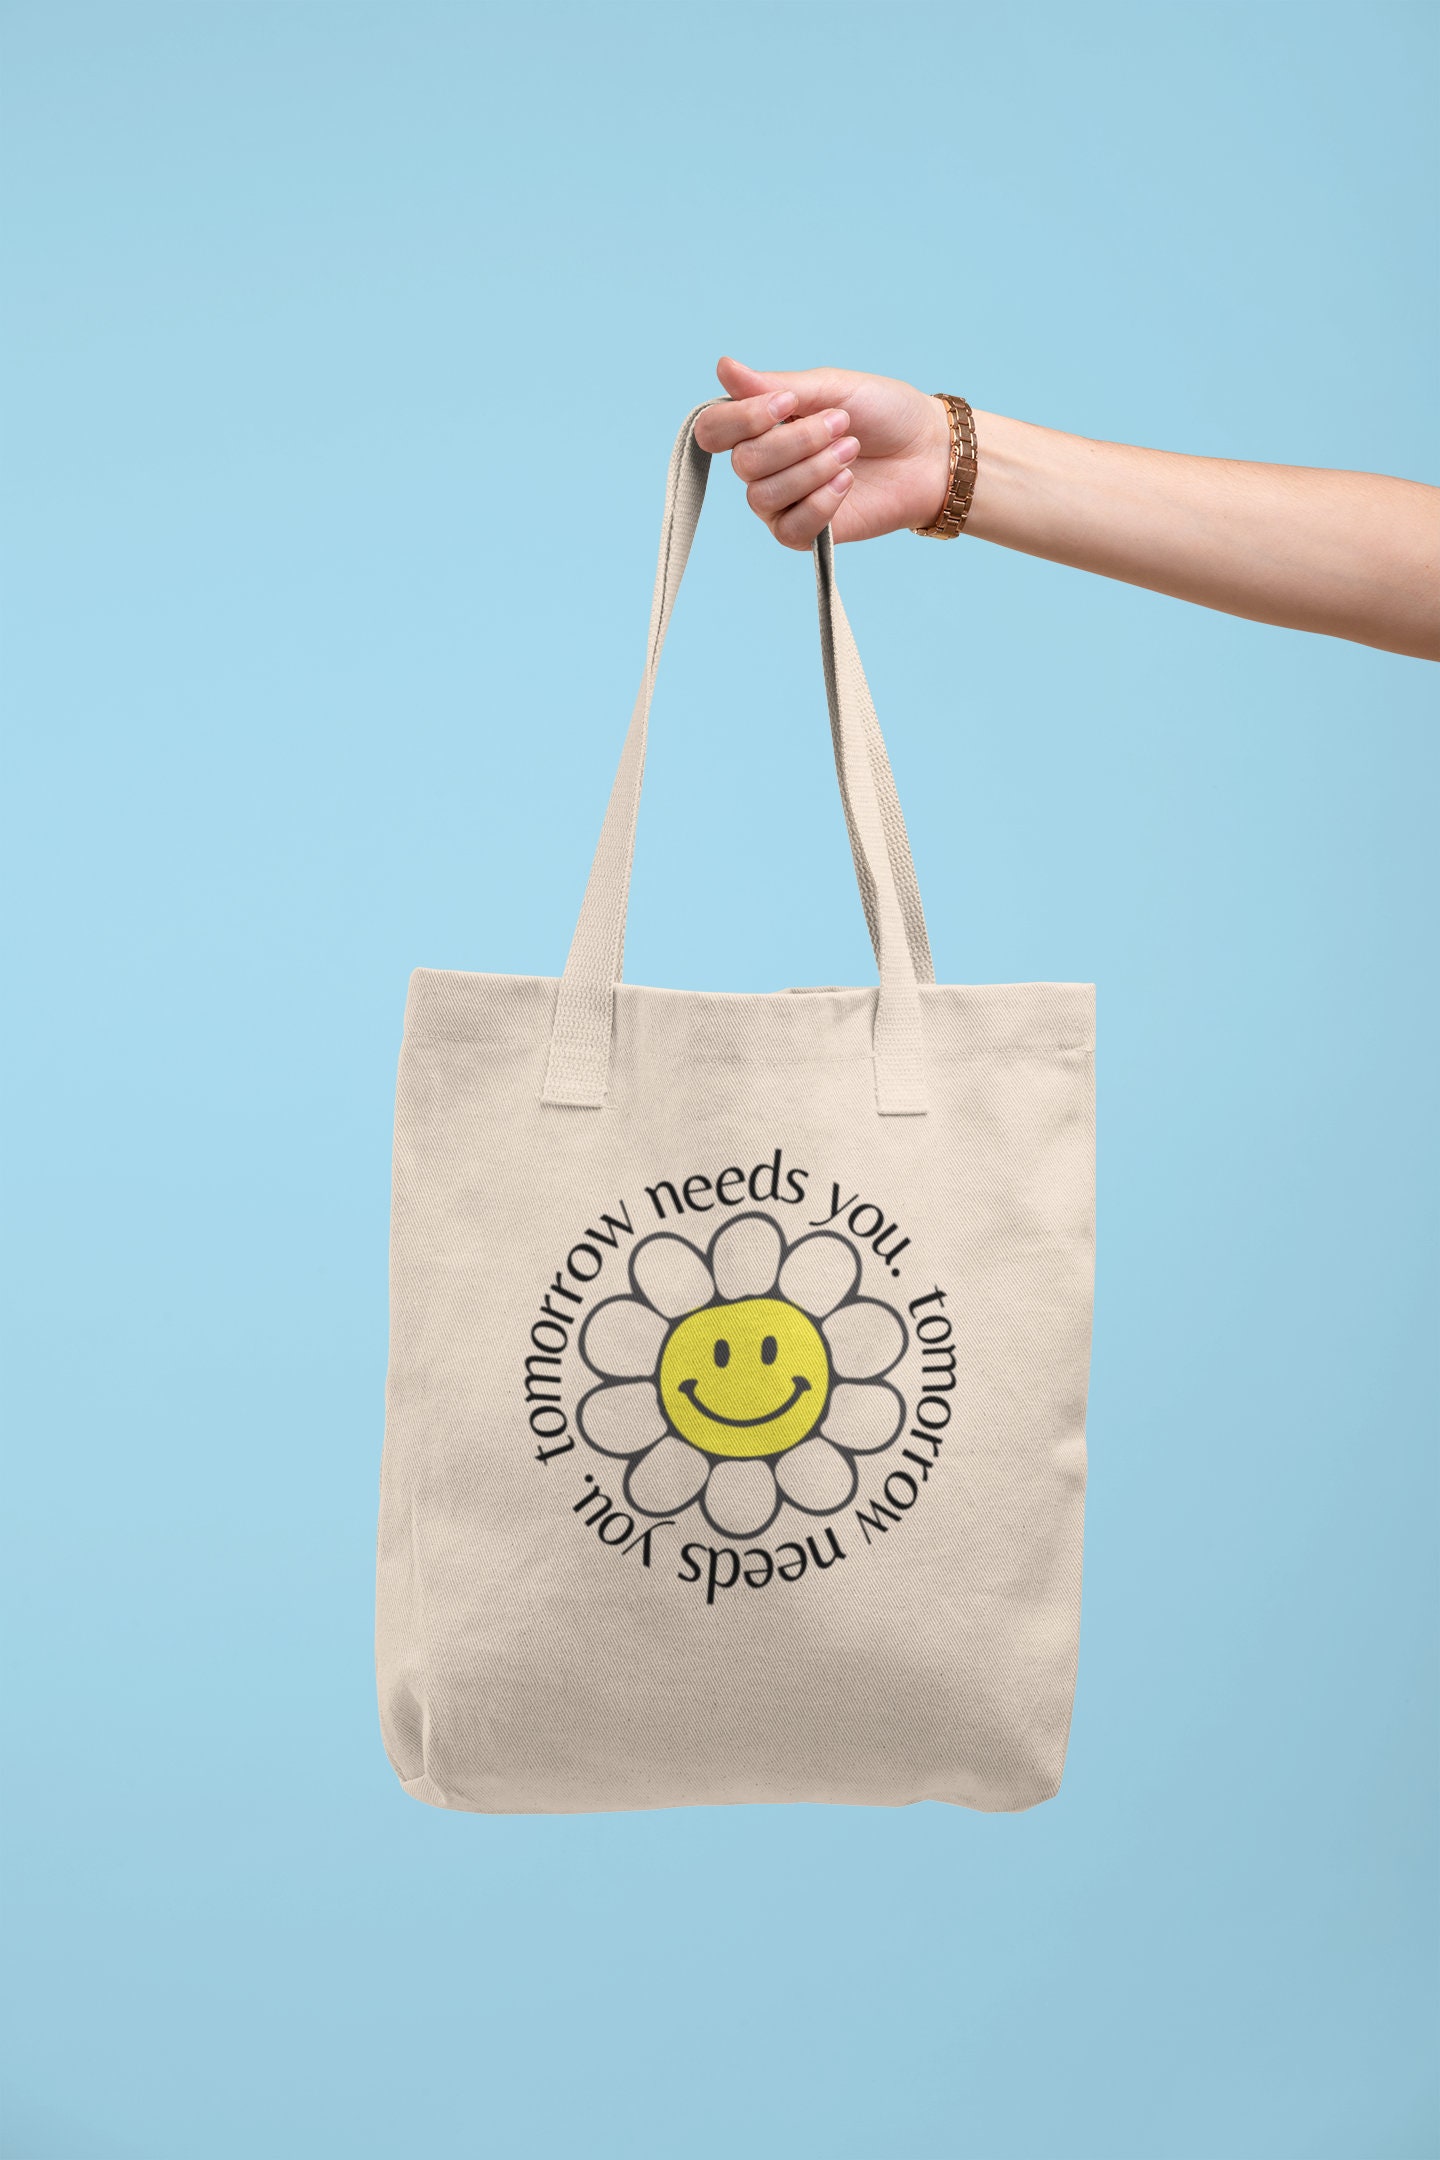 Tomorrow needs you trendy Tote Bag Beach Bag Shopping Bag | Etsy